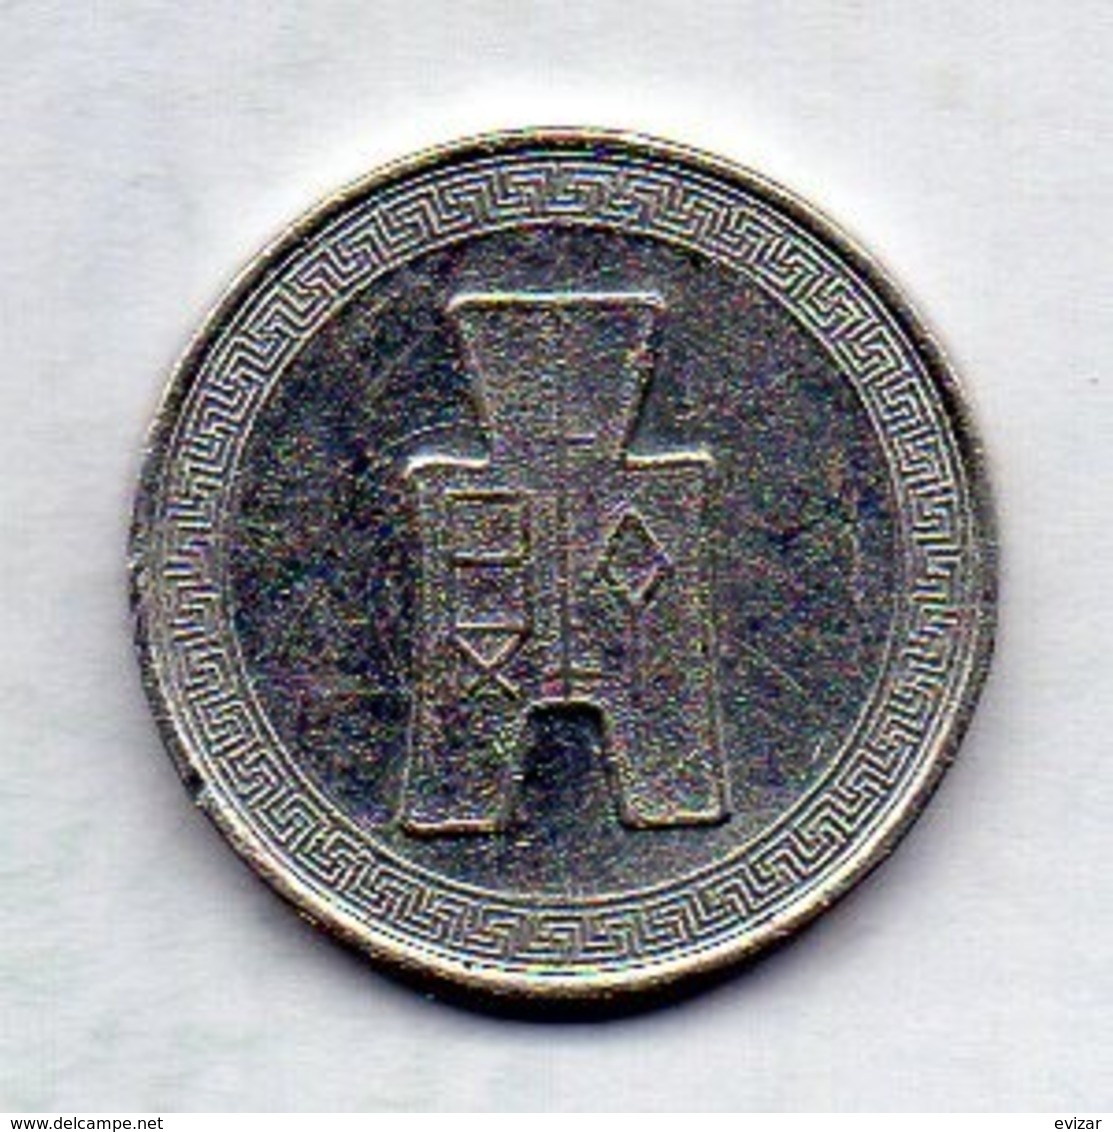 CHINA - REPUBLIC, 5 Cents, Aluminum, Year 1940, KM #356 - China